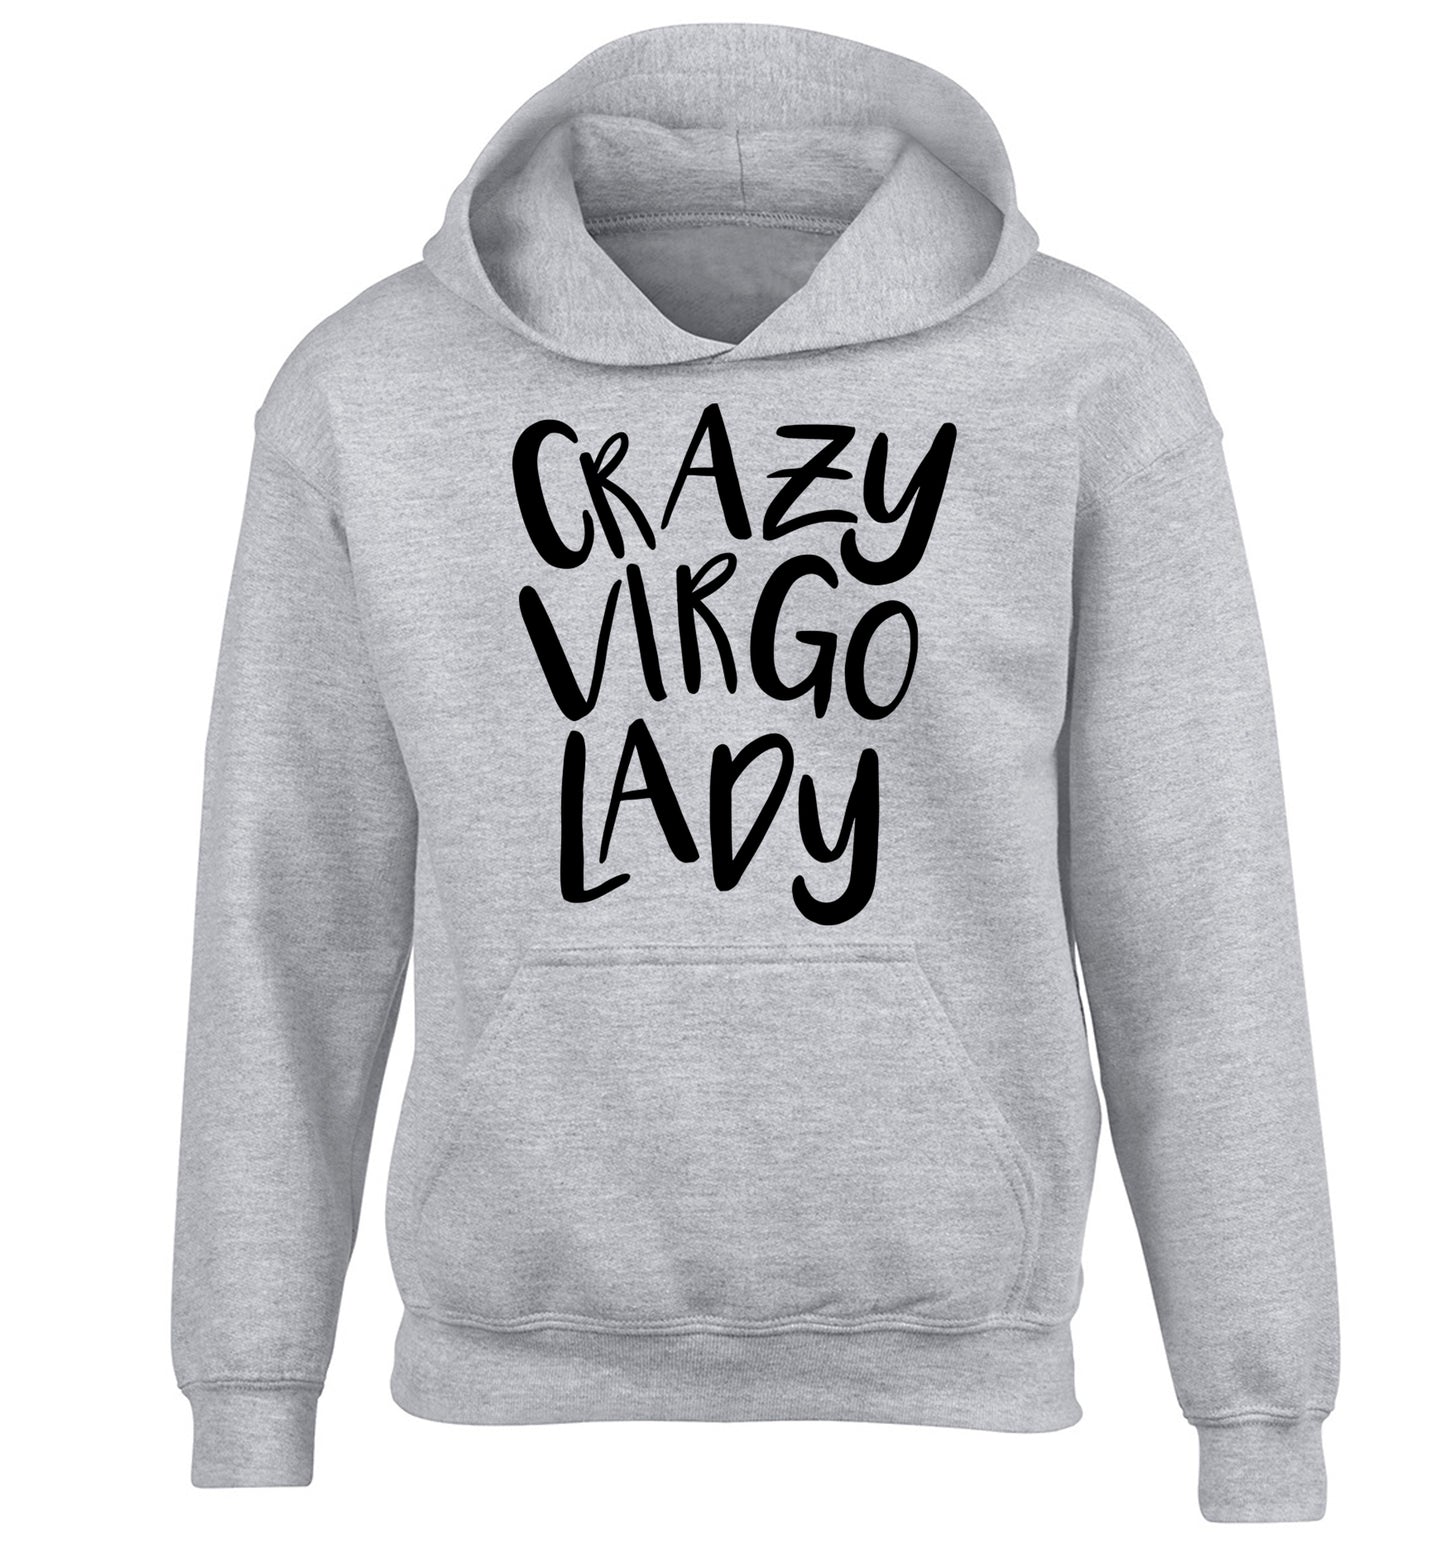 Crazy virgo lady children's grey hoodie 12-13 Years